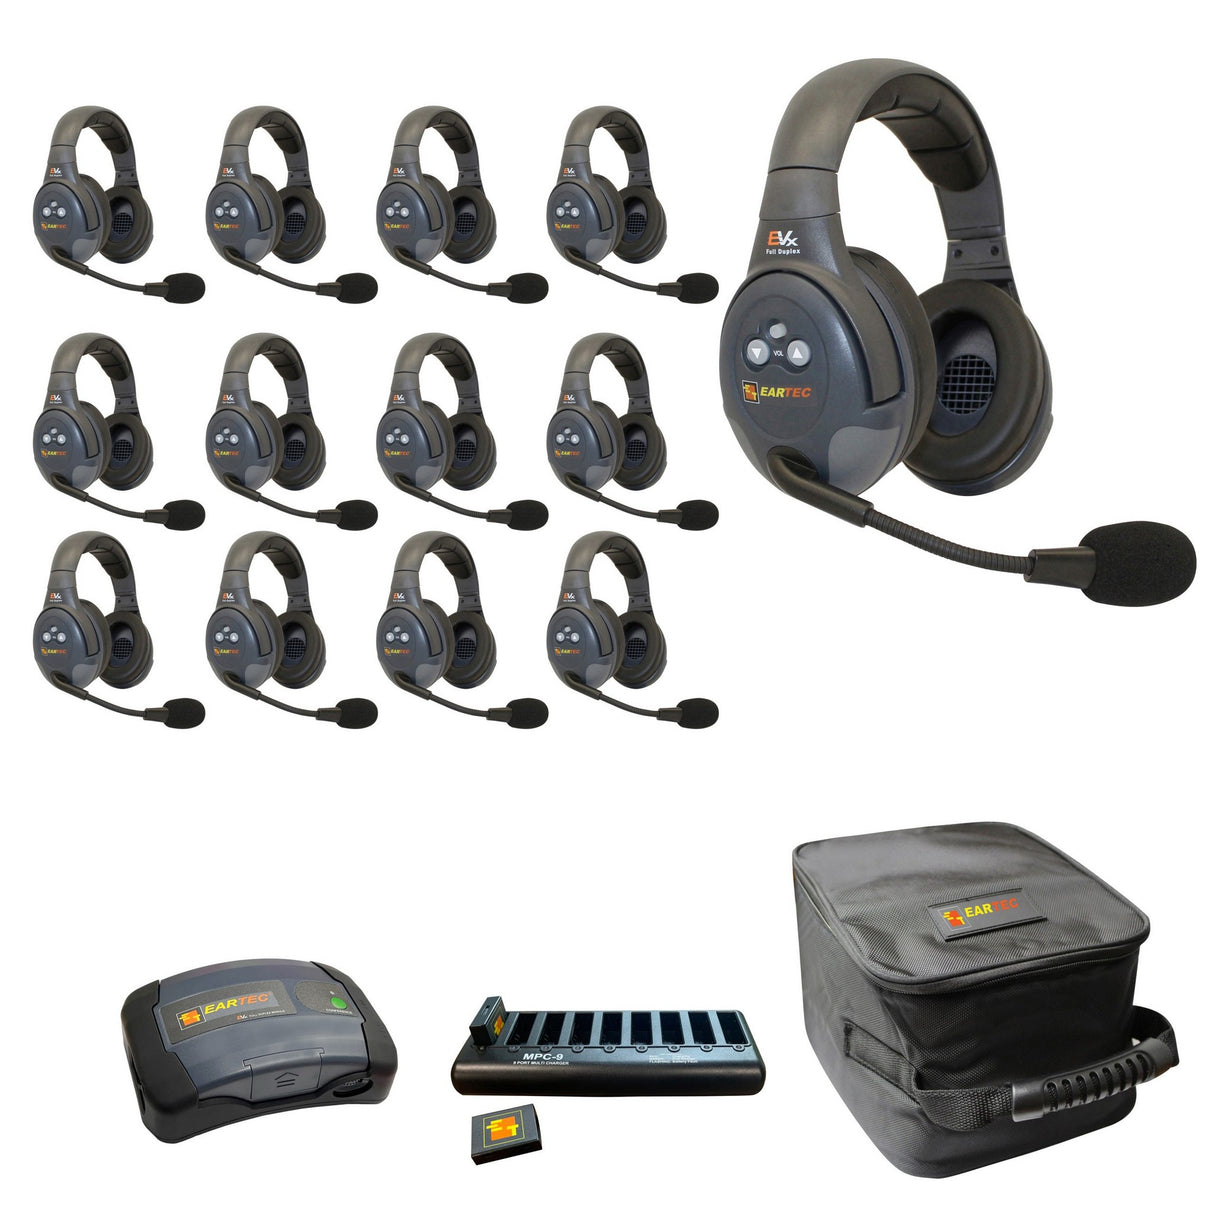 Eartec EVADE EVX13D-CM Full Duplex Dual Channel Wireless Intercom System with 13 Dual Speaker Headsets